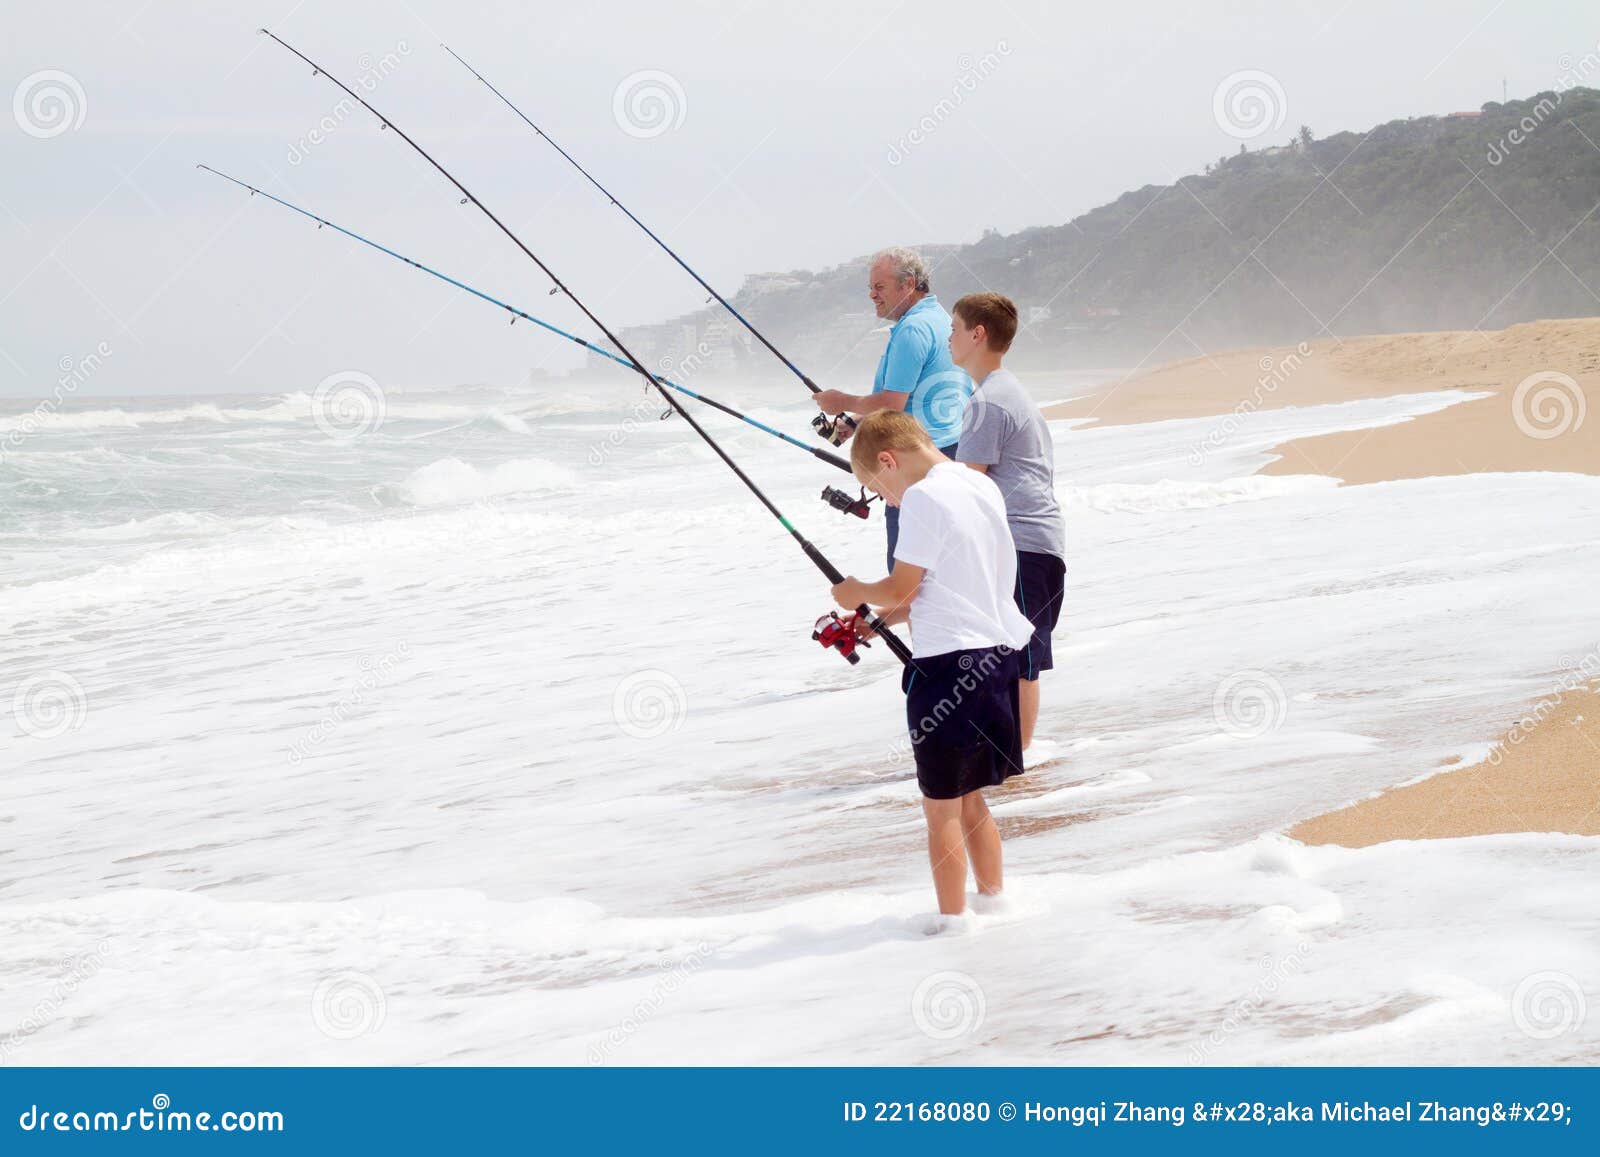 446 Child Fishing Grandpa Stock Photos - Free & Royalty-Free Stock